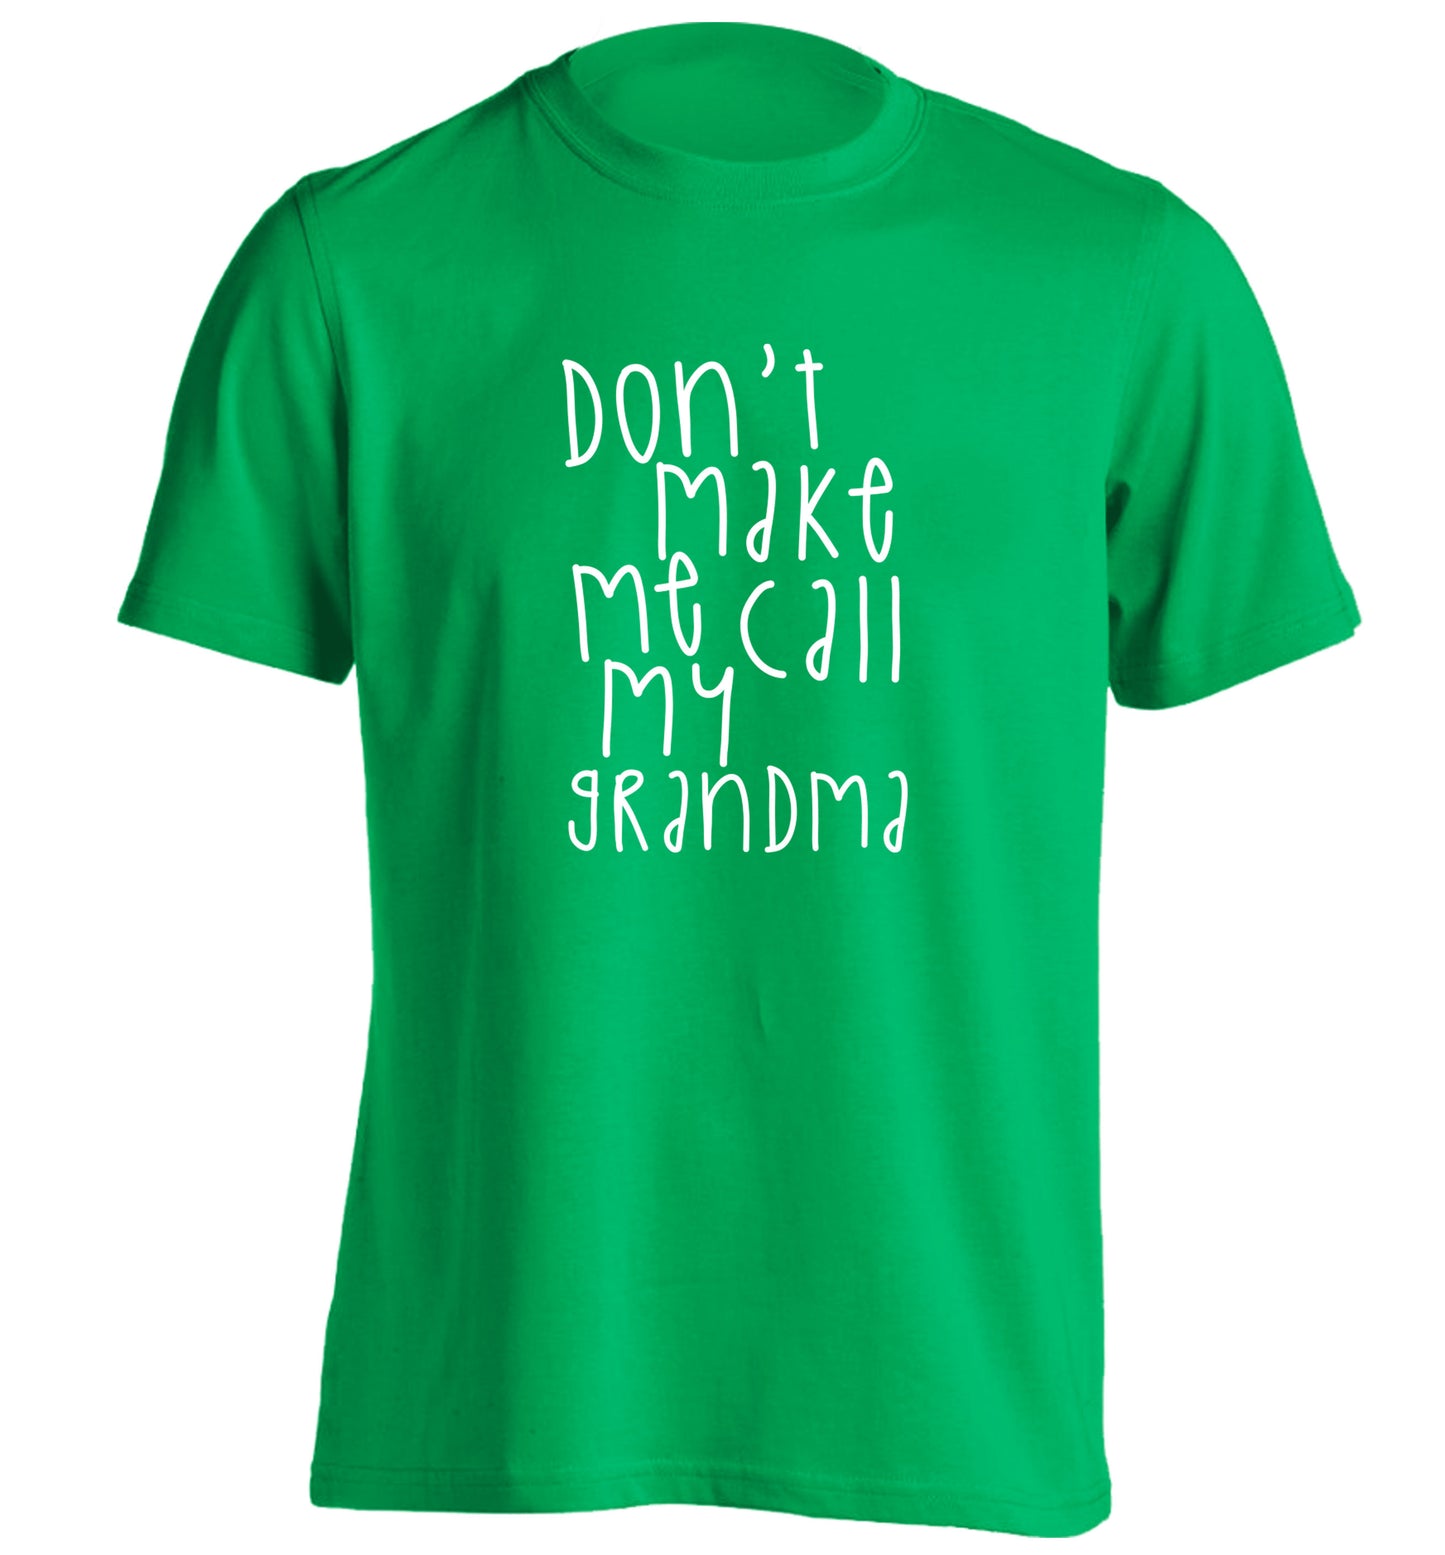 Don't make me call my grandma adults unisex green Tshirt 2XL